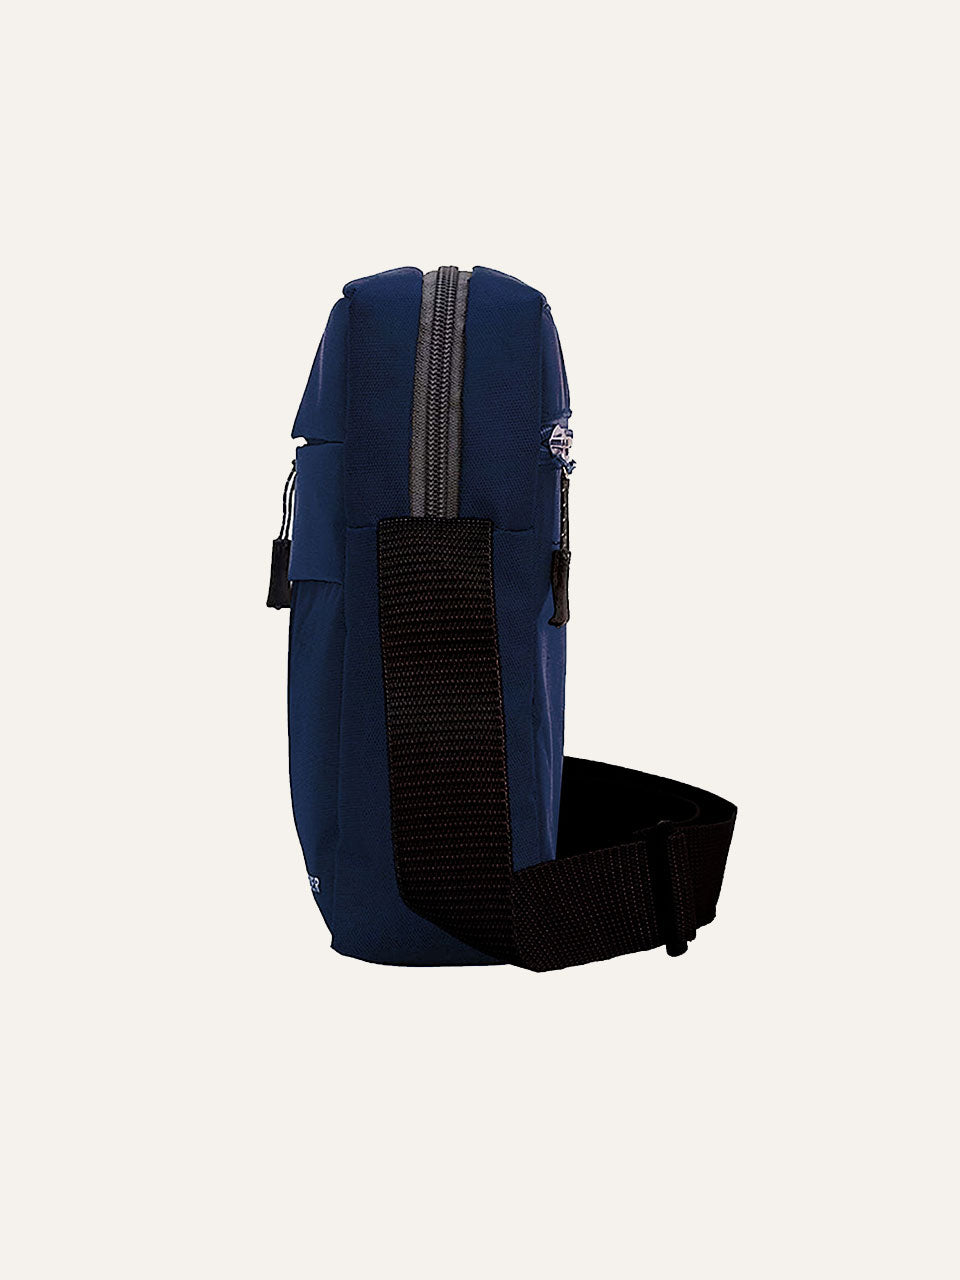 Men's Innerwear set (Pack of 6) with Free Sling Bag